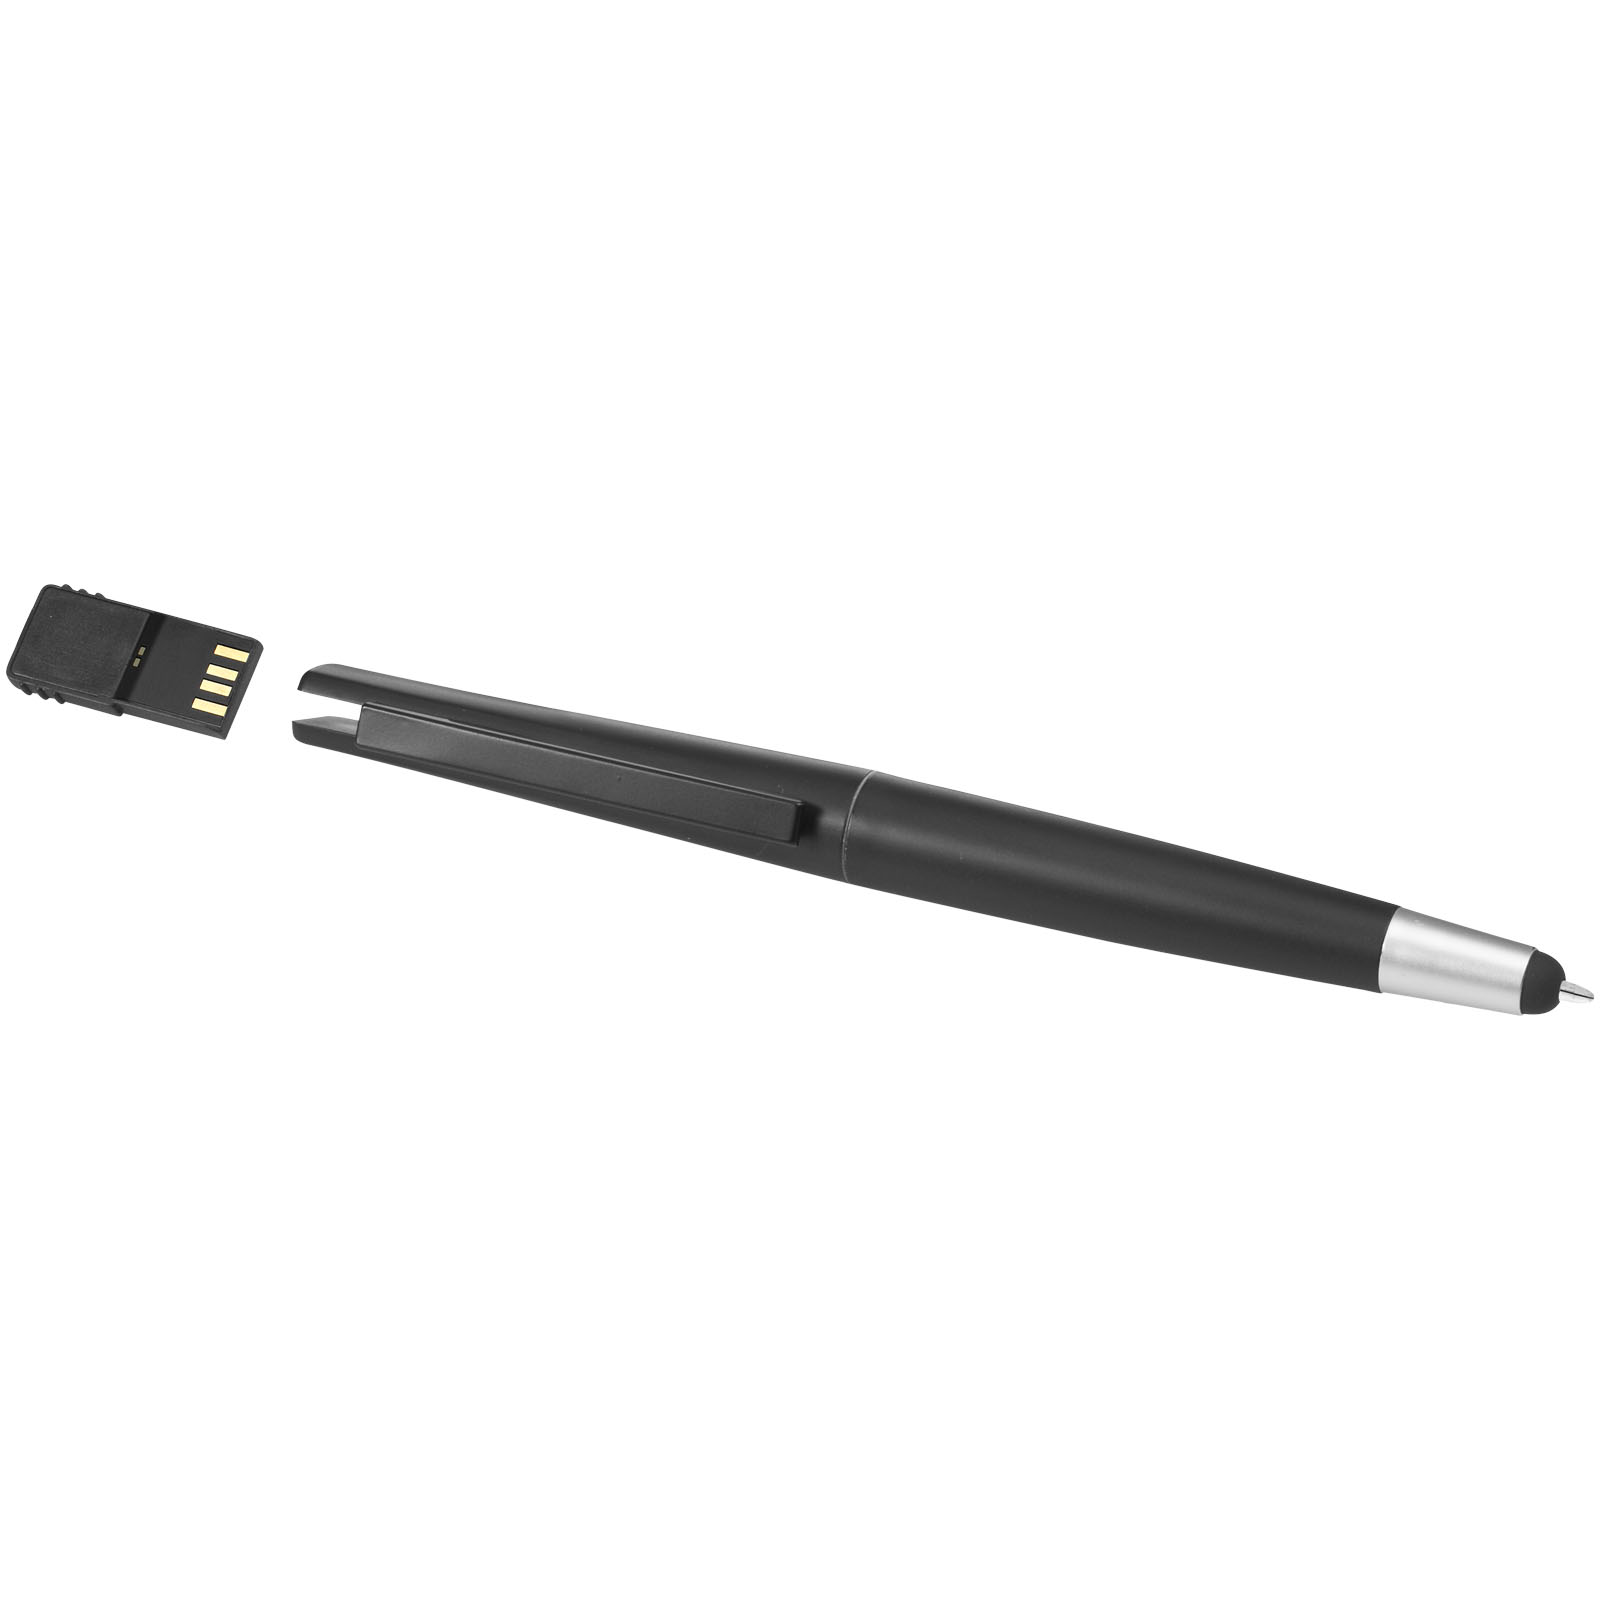 Naju stylus ballpoint pen with 4GB flash drive